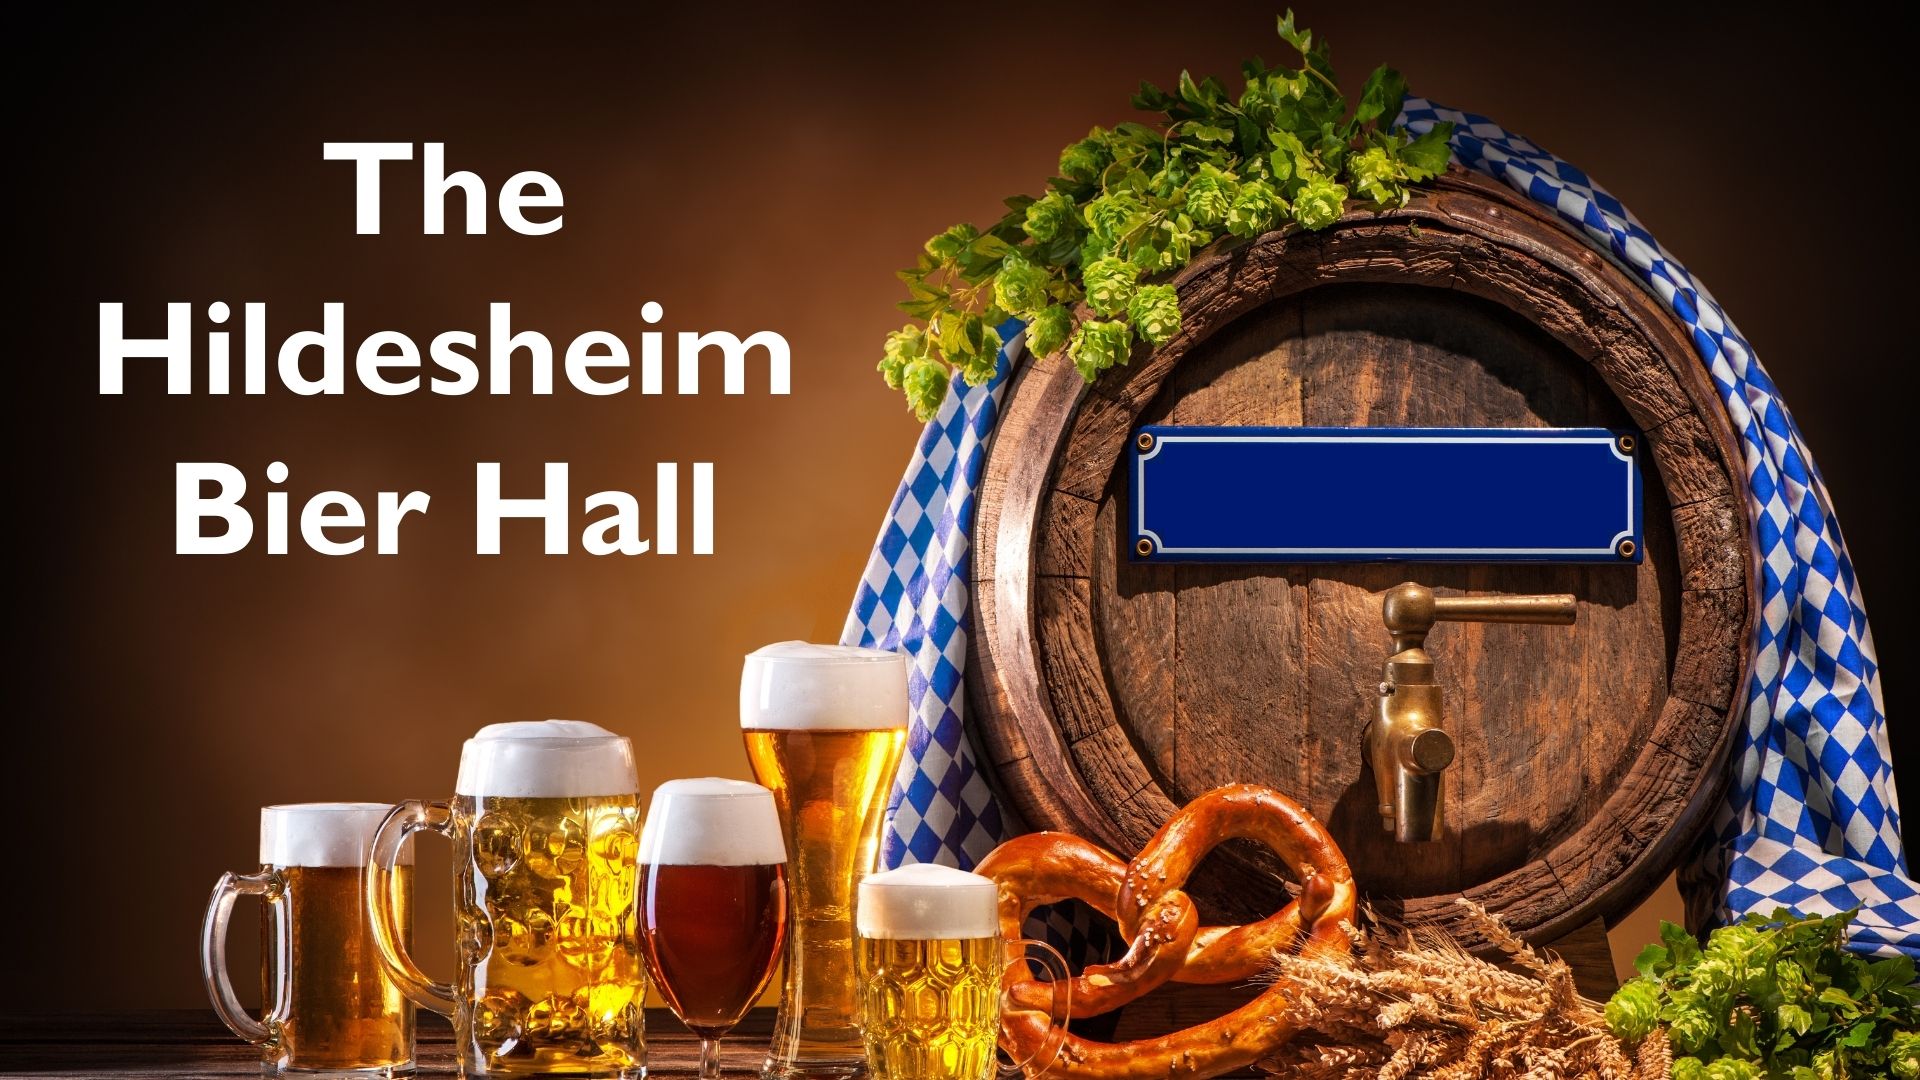 The Hildesheim Beer Hall